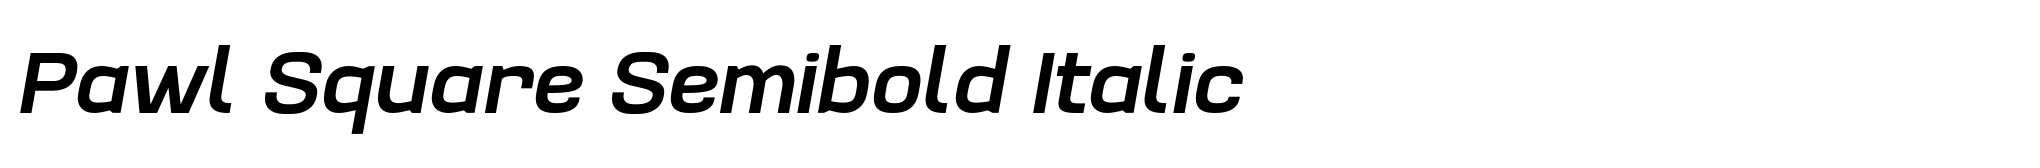 Pawl Square Semibold Italic image